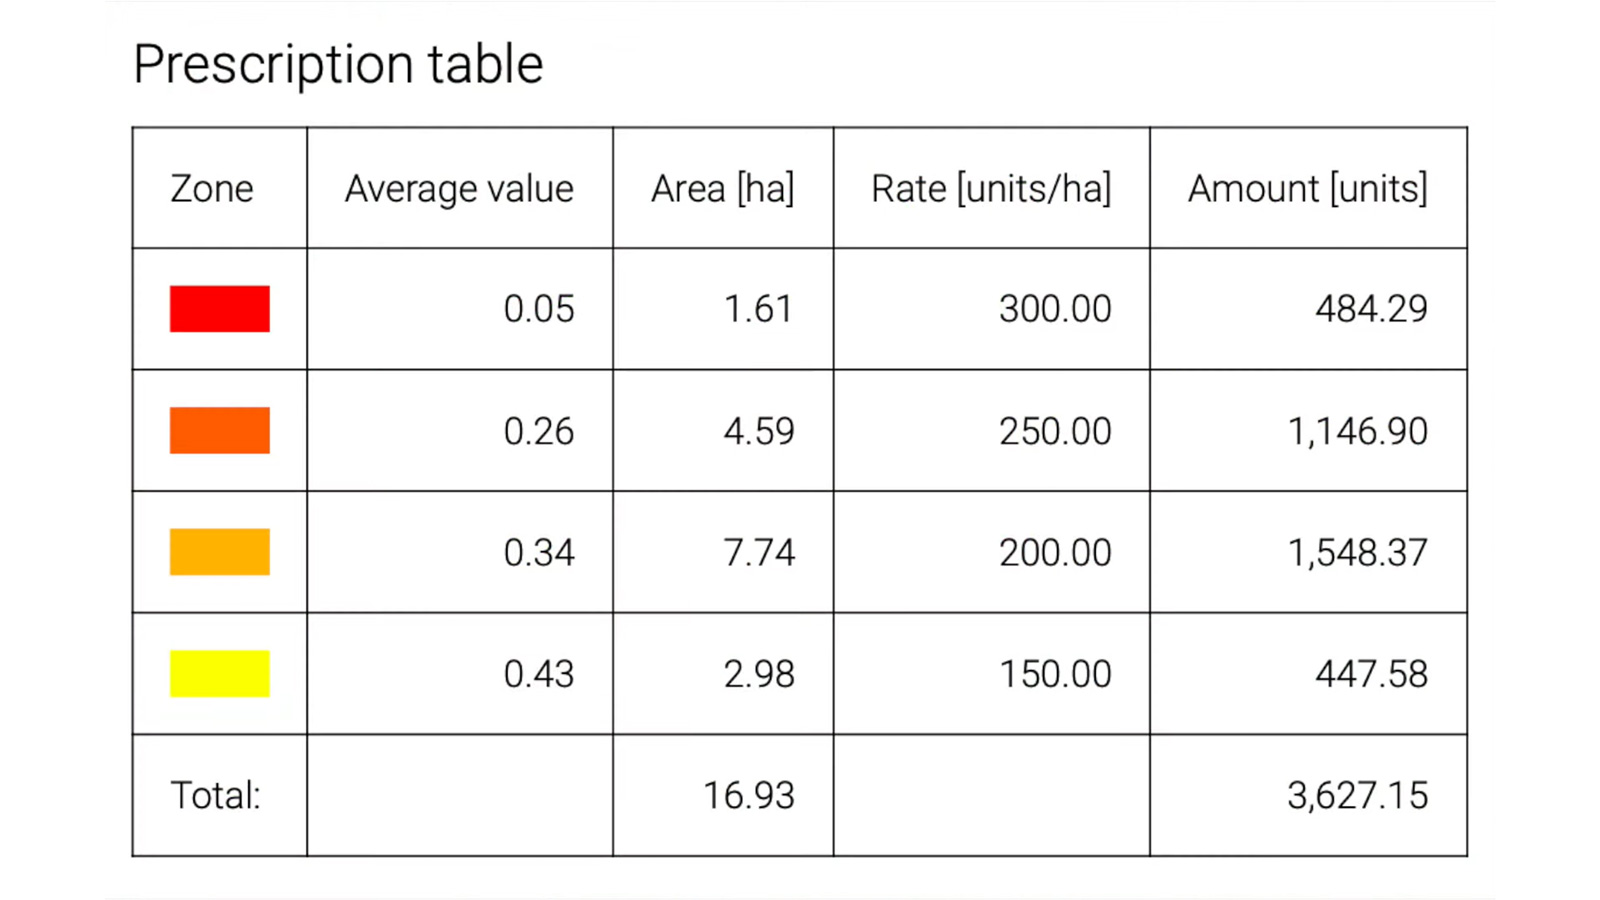 Table with prescription values for fertilizer application